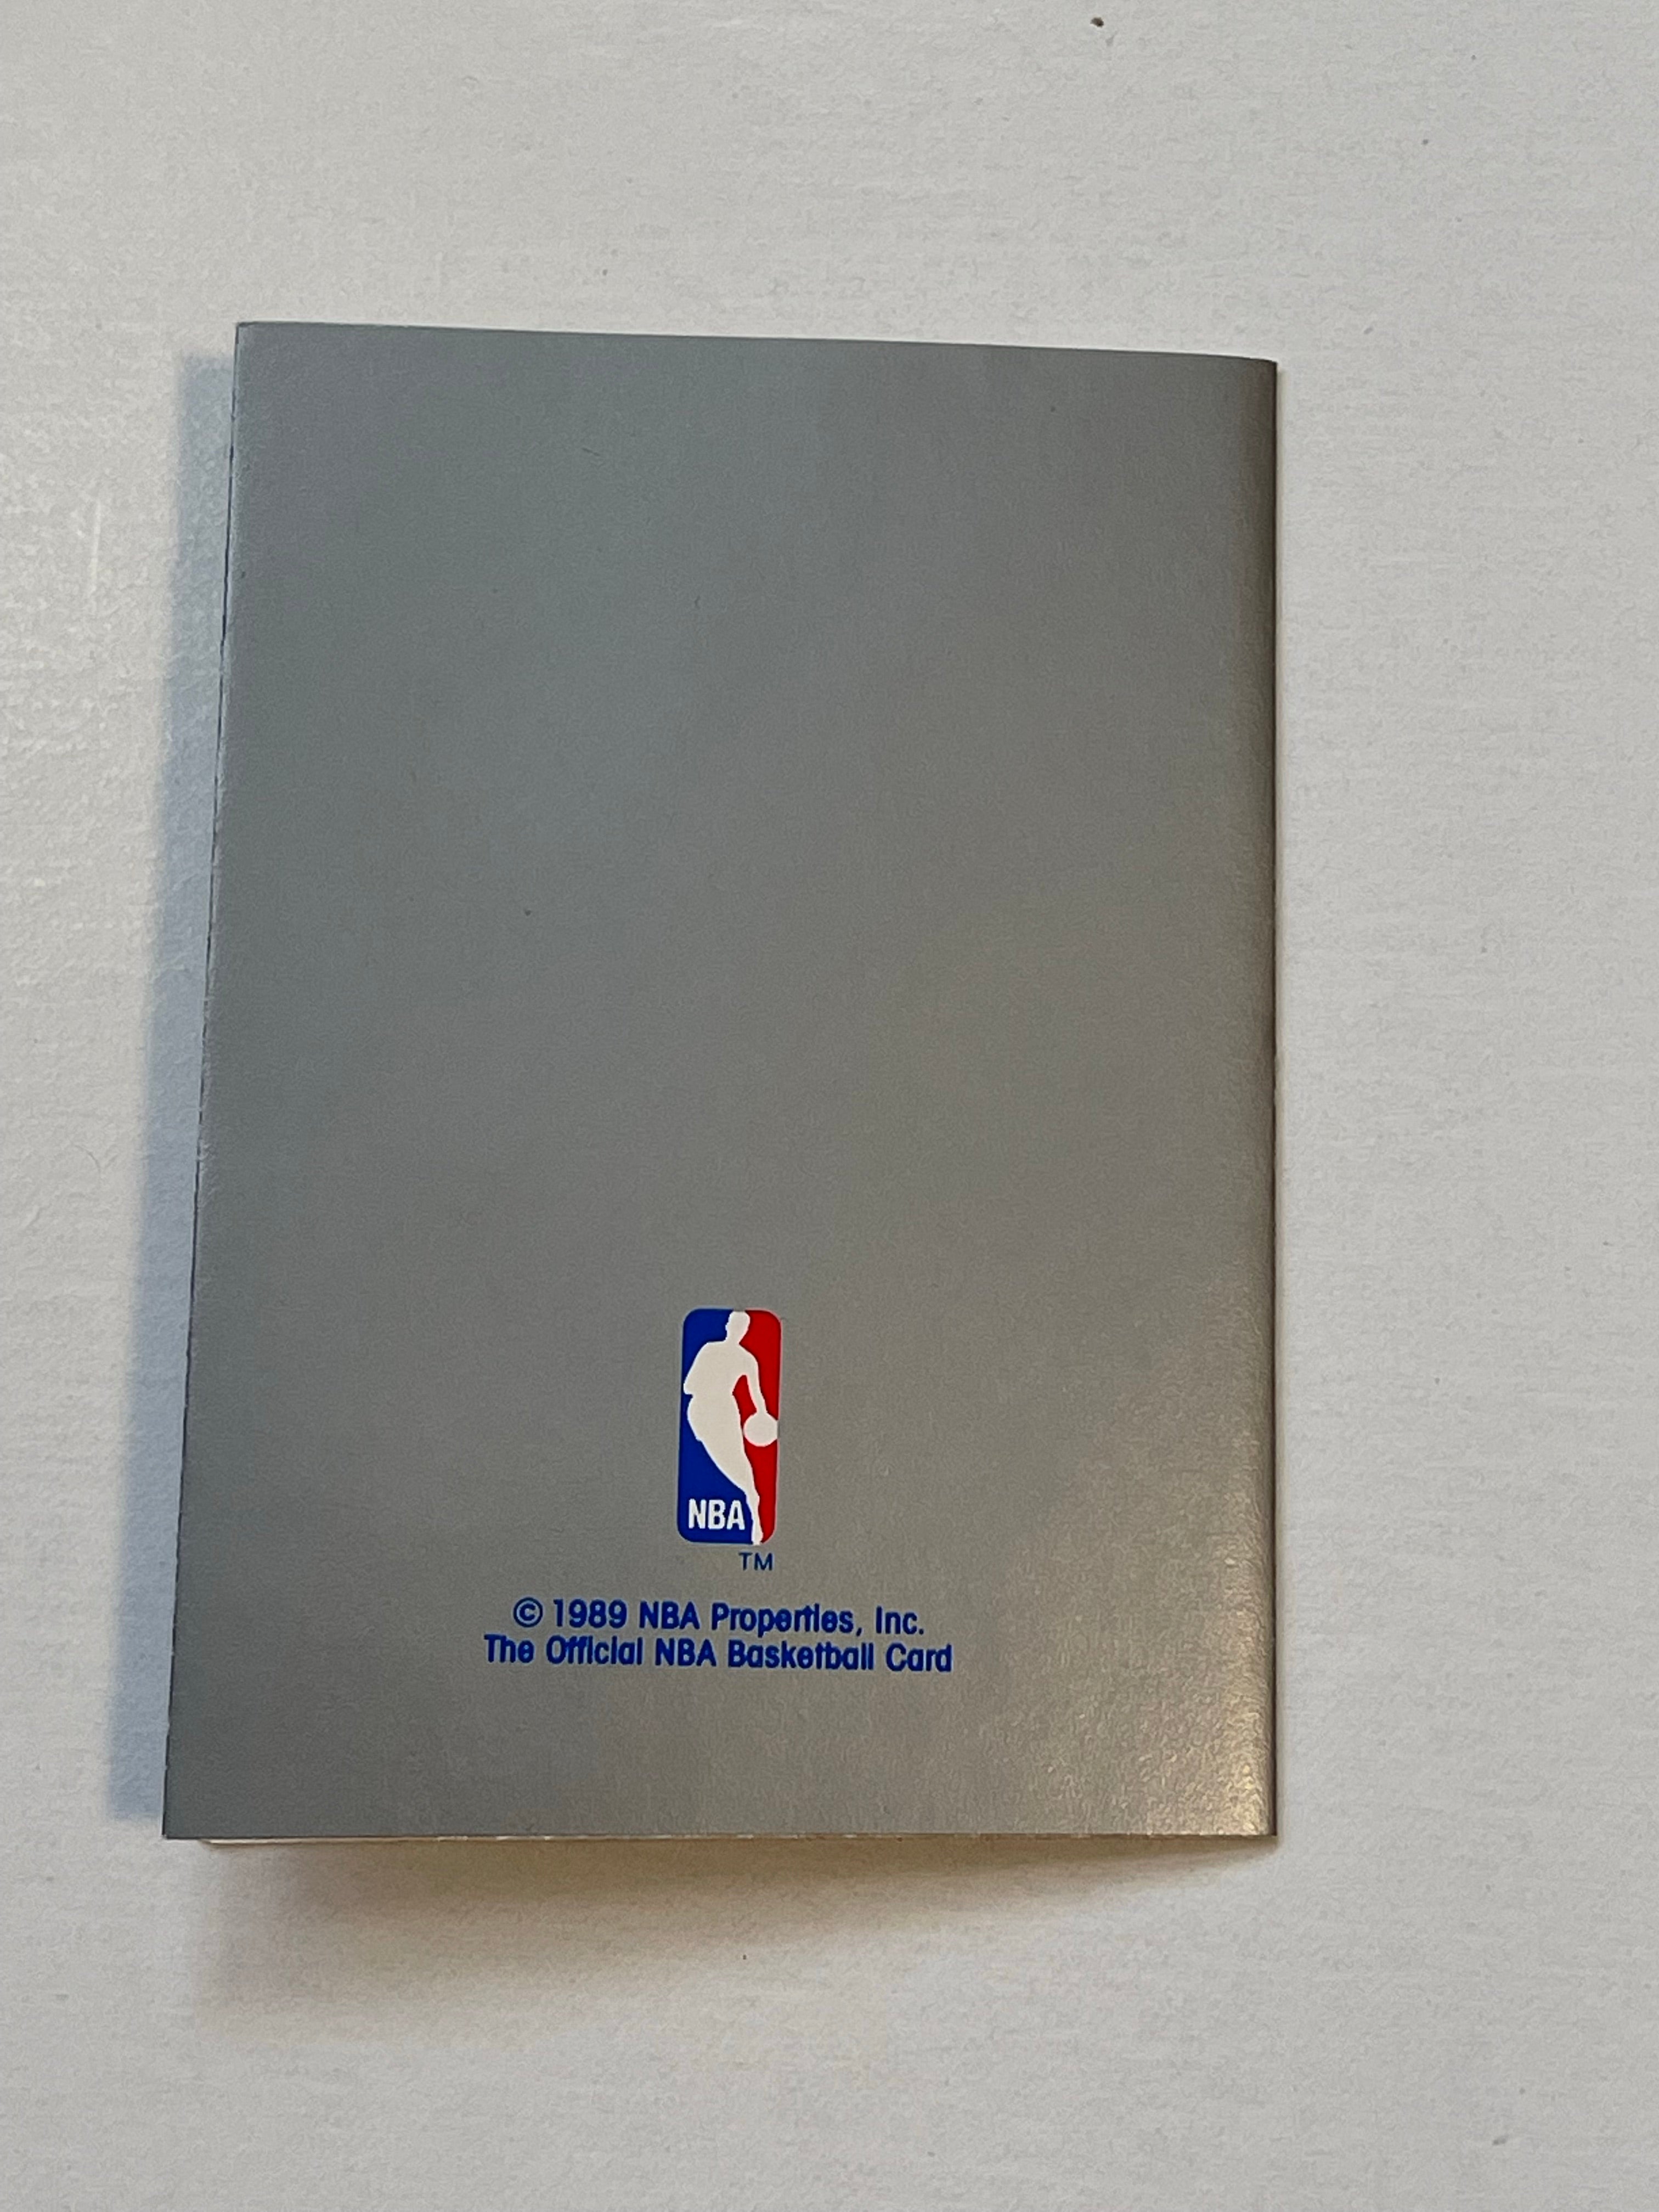 NBA Hoops series 1 rare mail away basketball checklist 1989